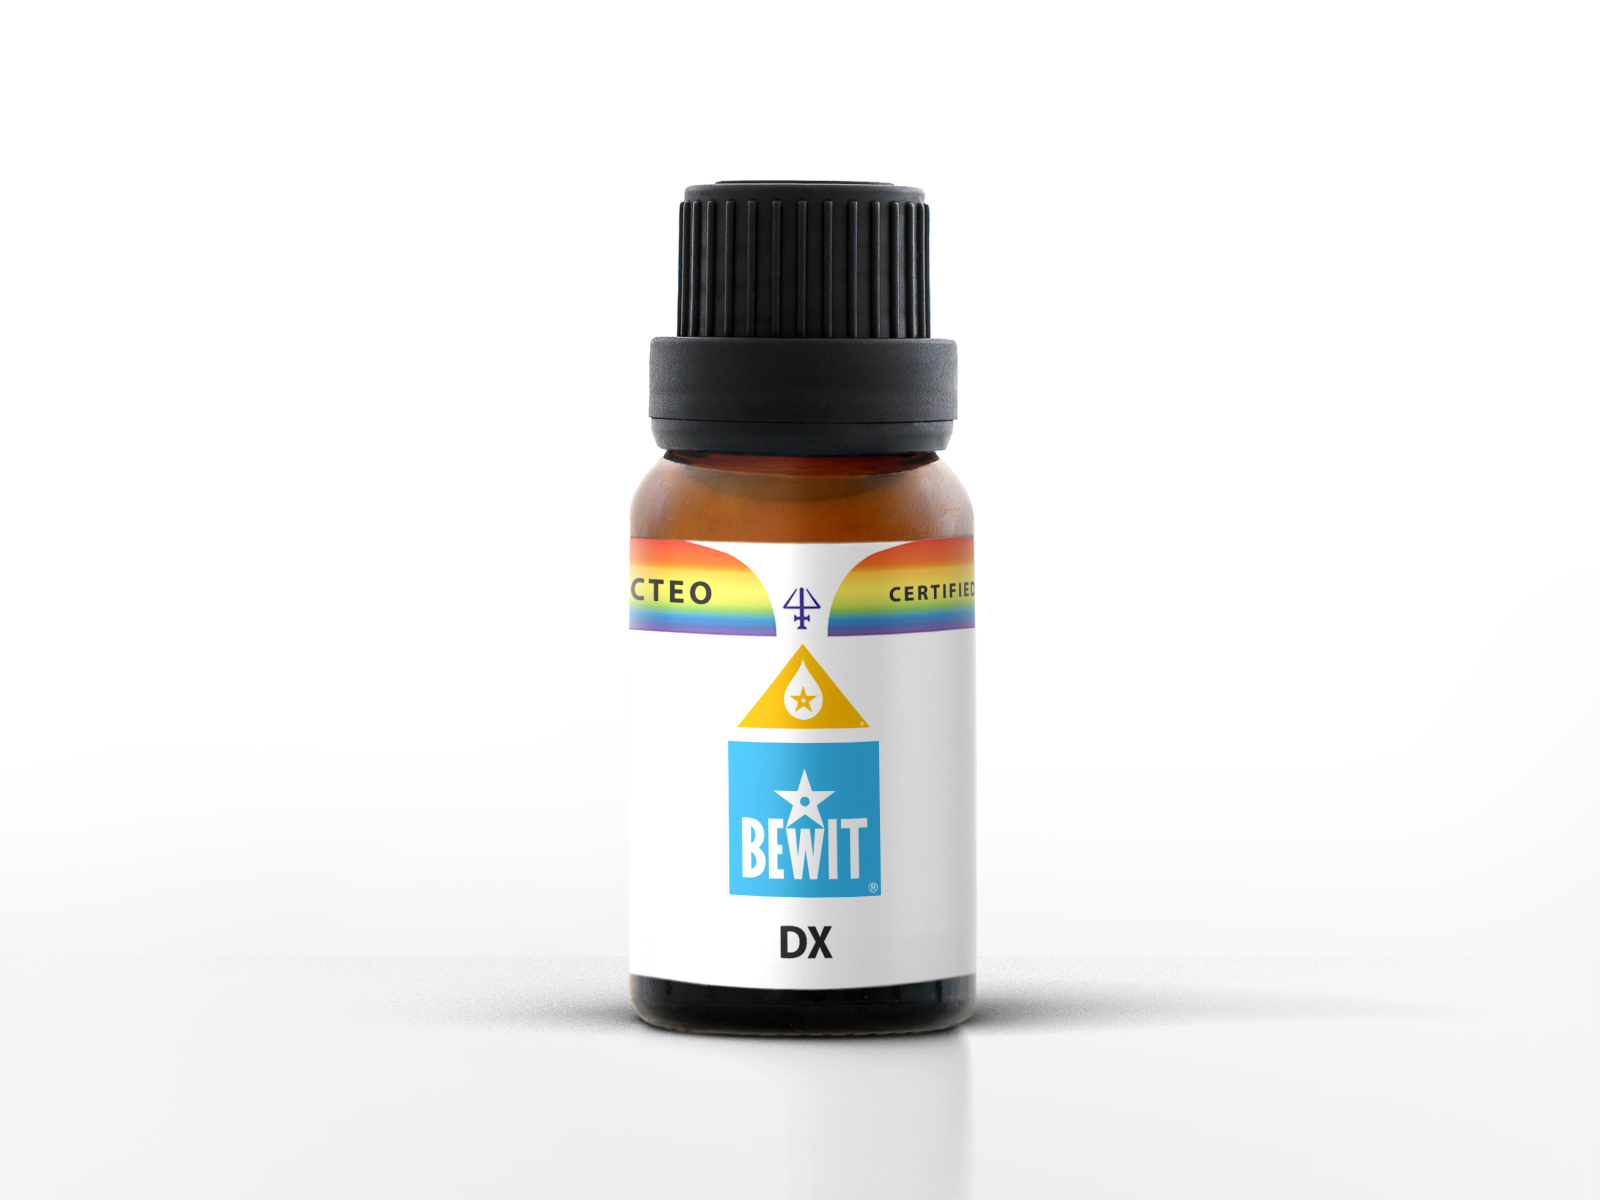 BEWIT DX - Blend of essential oils - 1